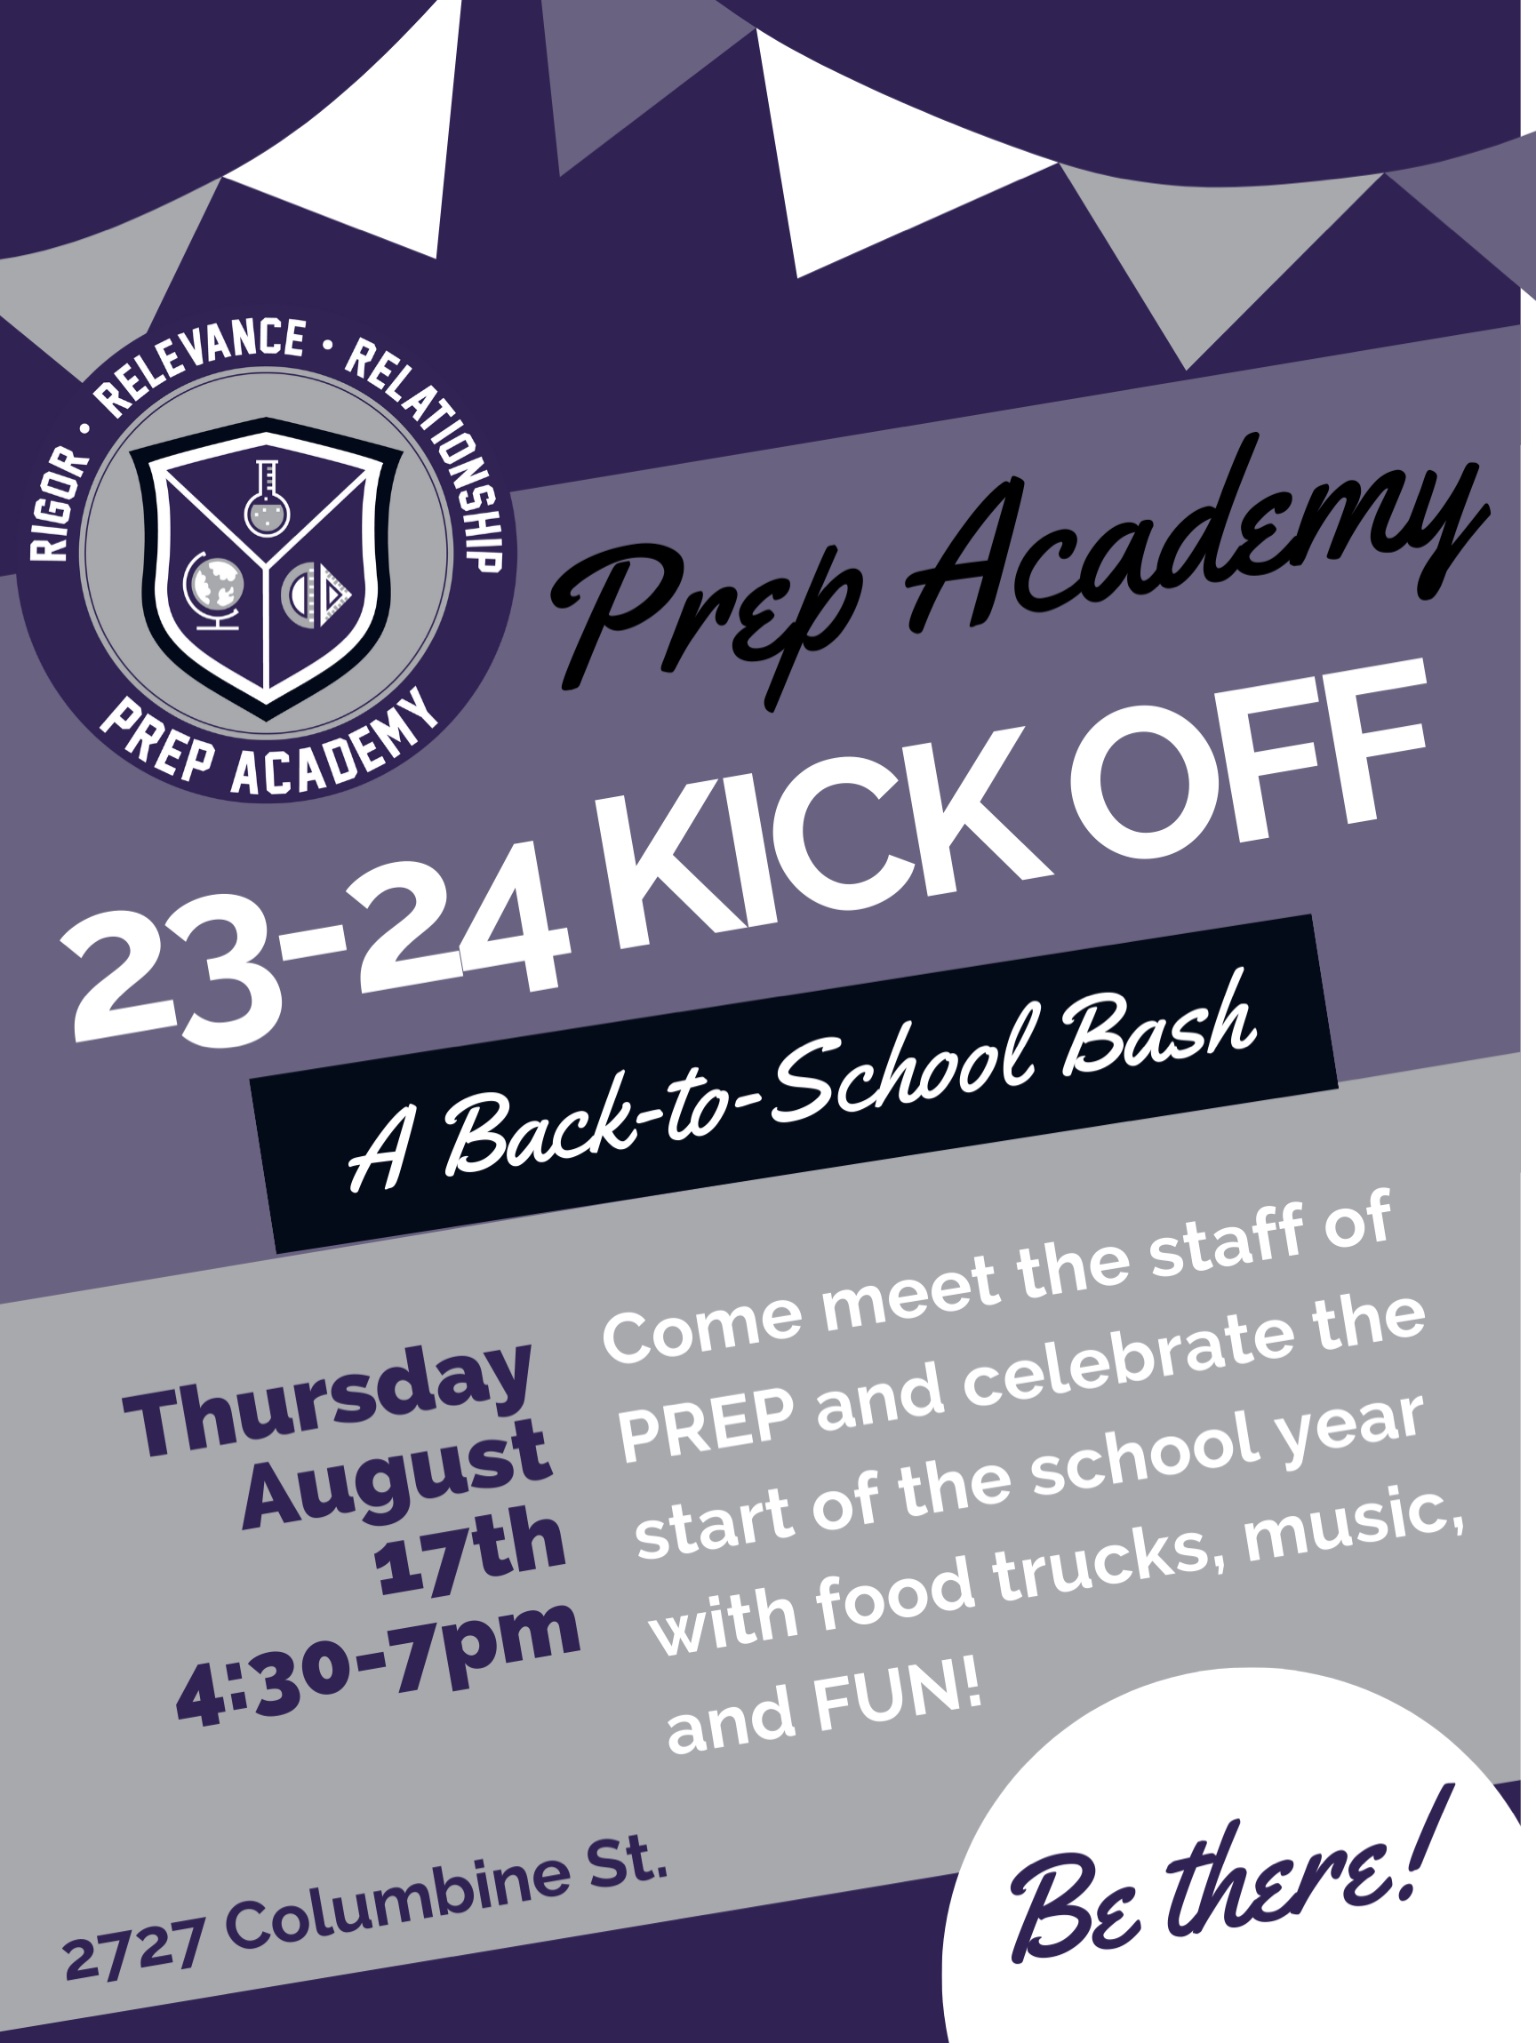 PREP Academy Kick Off flyer